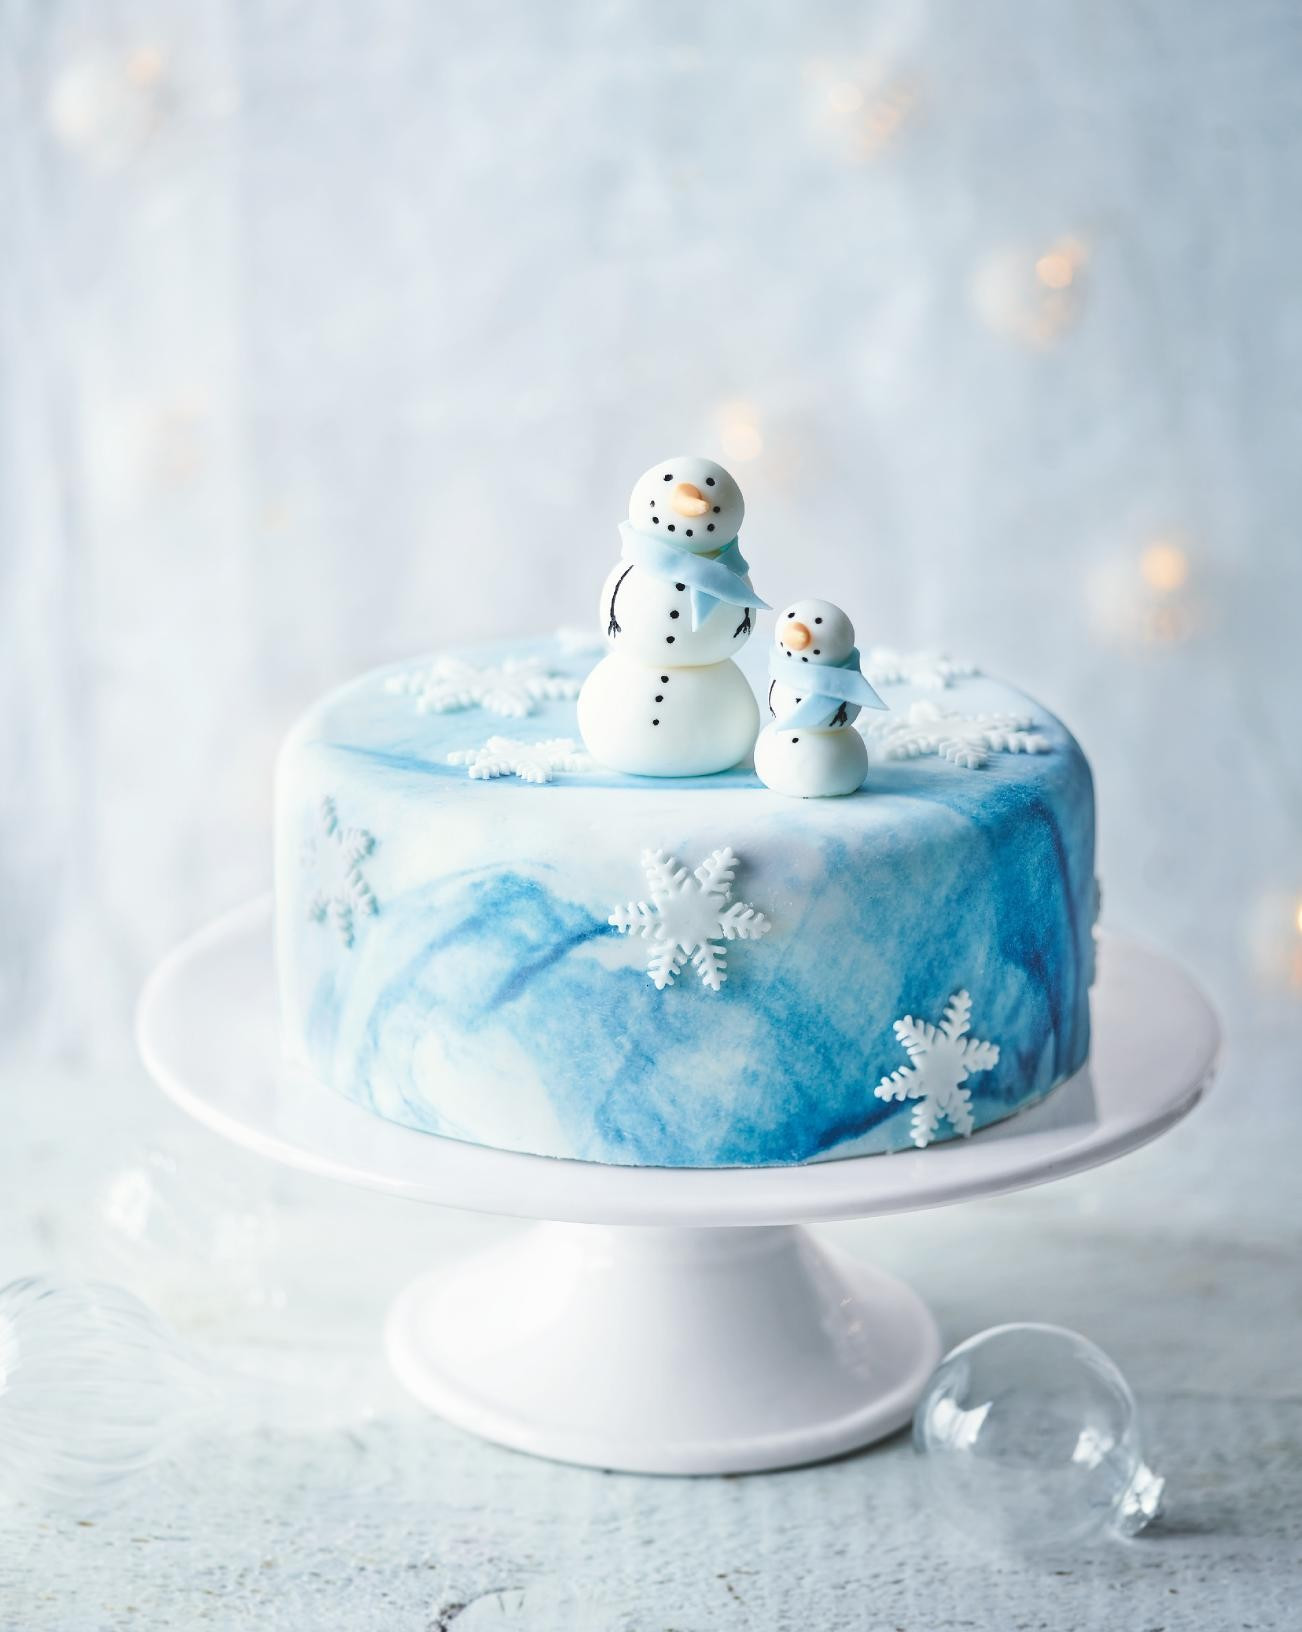 Winter Wonderland Birthday Cake
 How to make a WINTER WONDERLAND CAKE